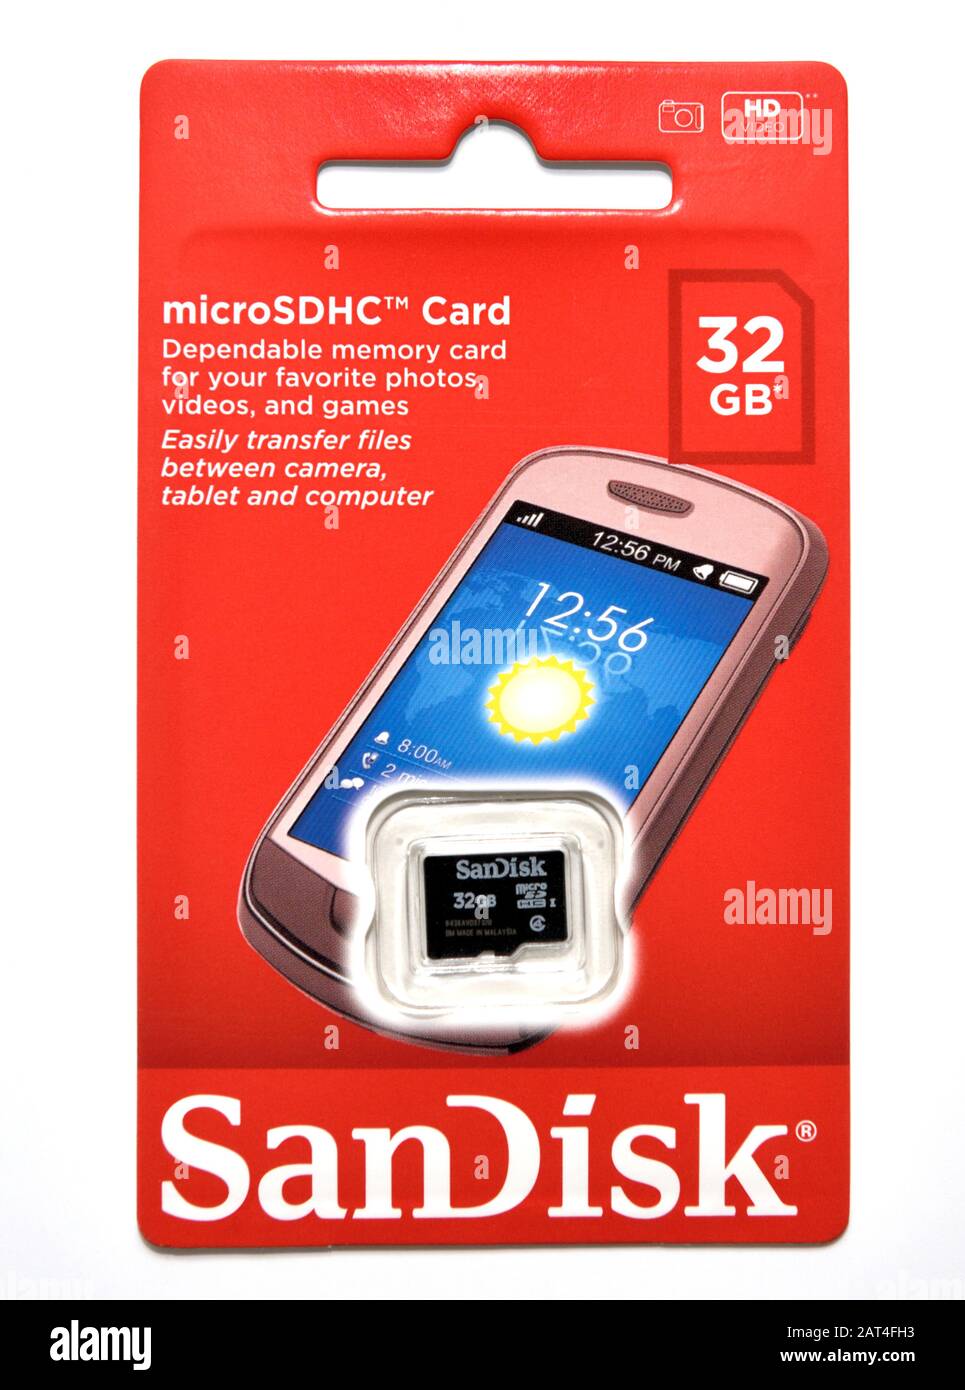 Sandisk Microsdhc 32gb Memory Card Retail Pack Stock Photo Alamy